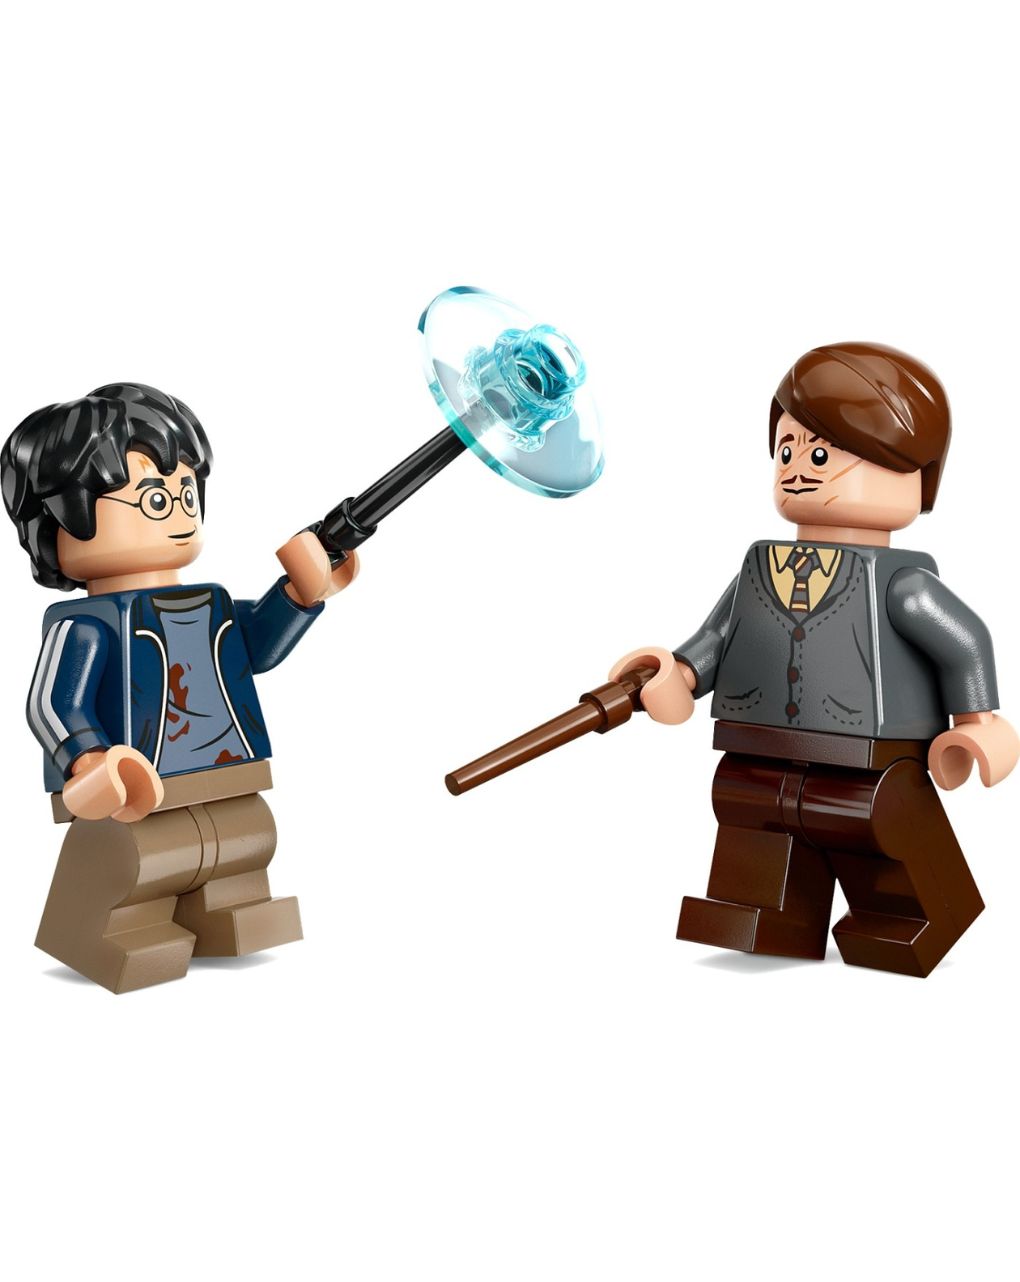 Lego harry potter expecto patronum 76414 - Lego, Lego Harry Potter